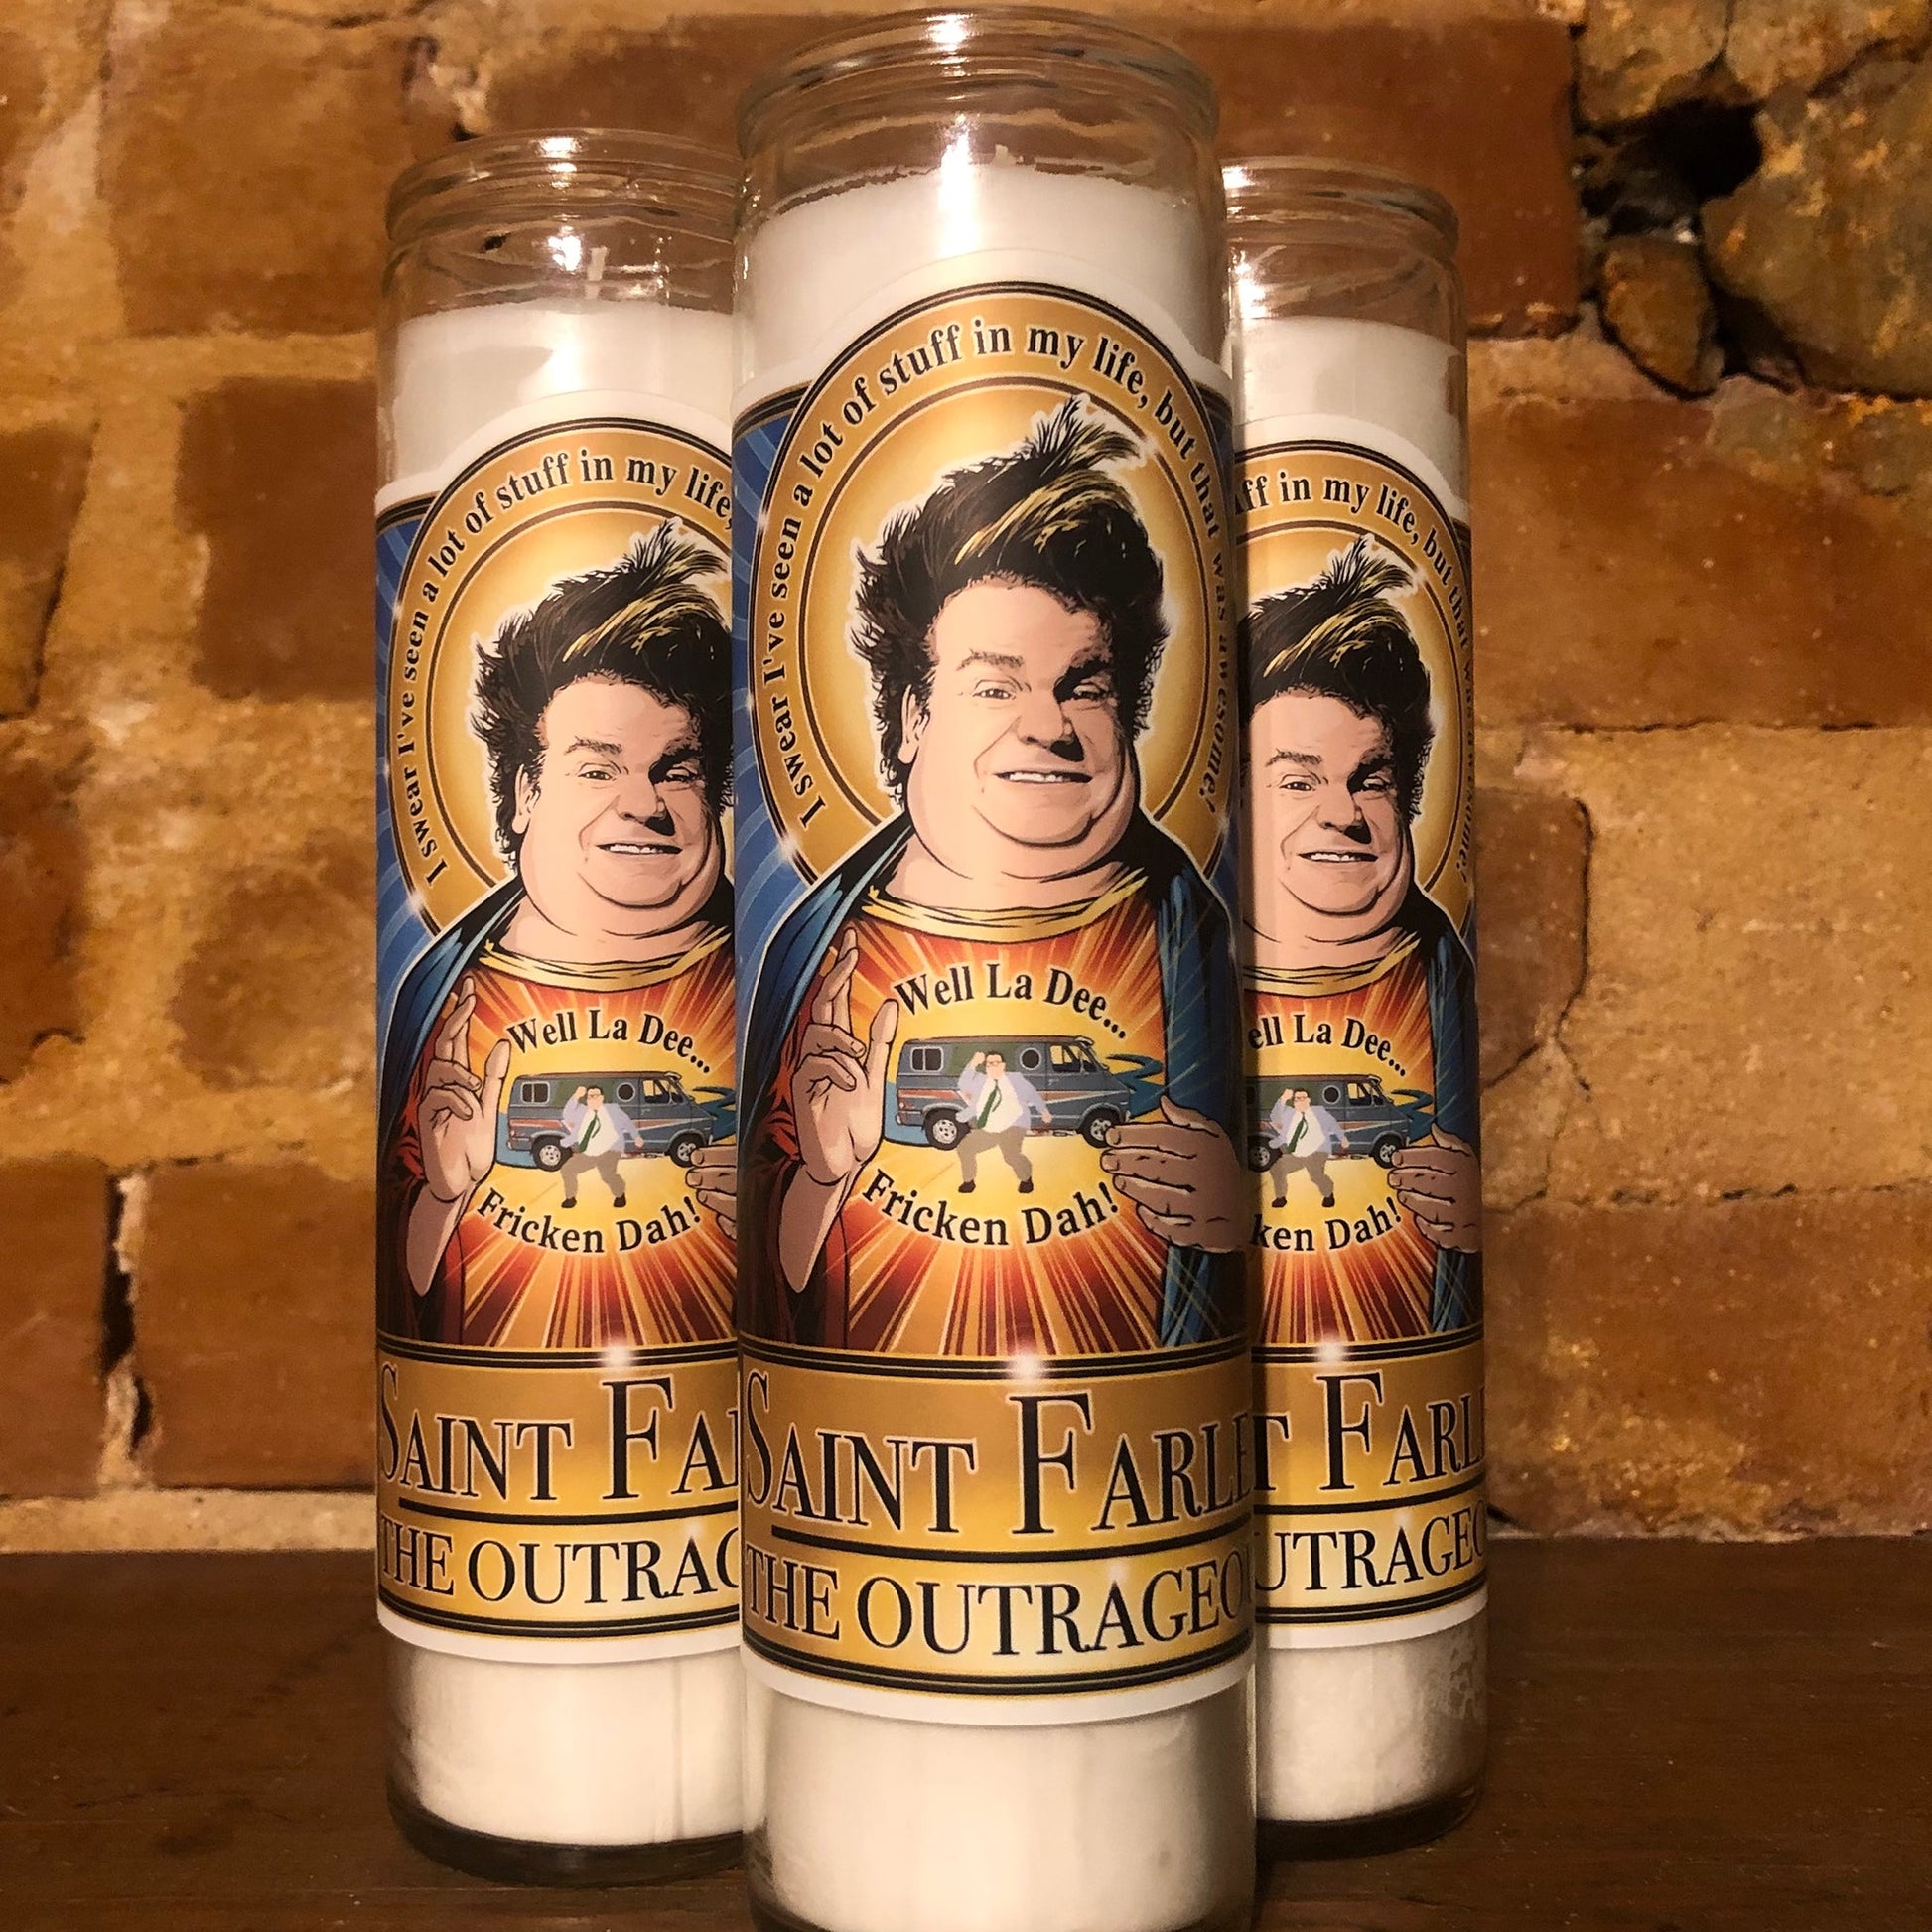 Saint Farley The Outrageous Candle Cleaverandblade.com